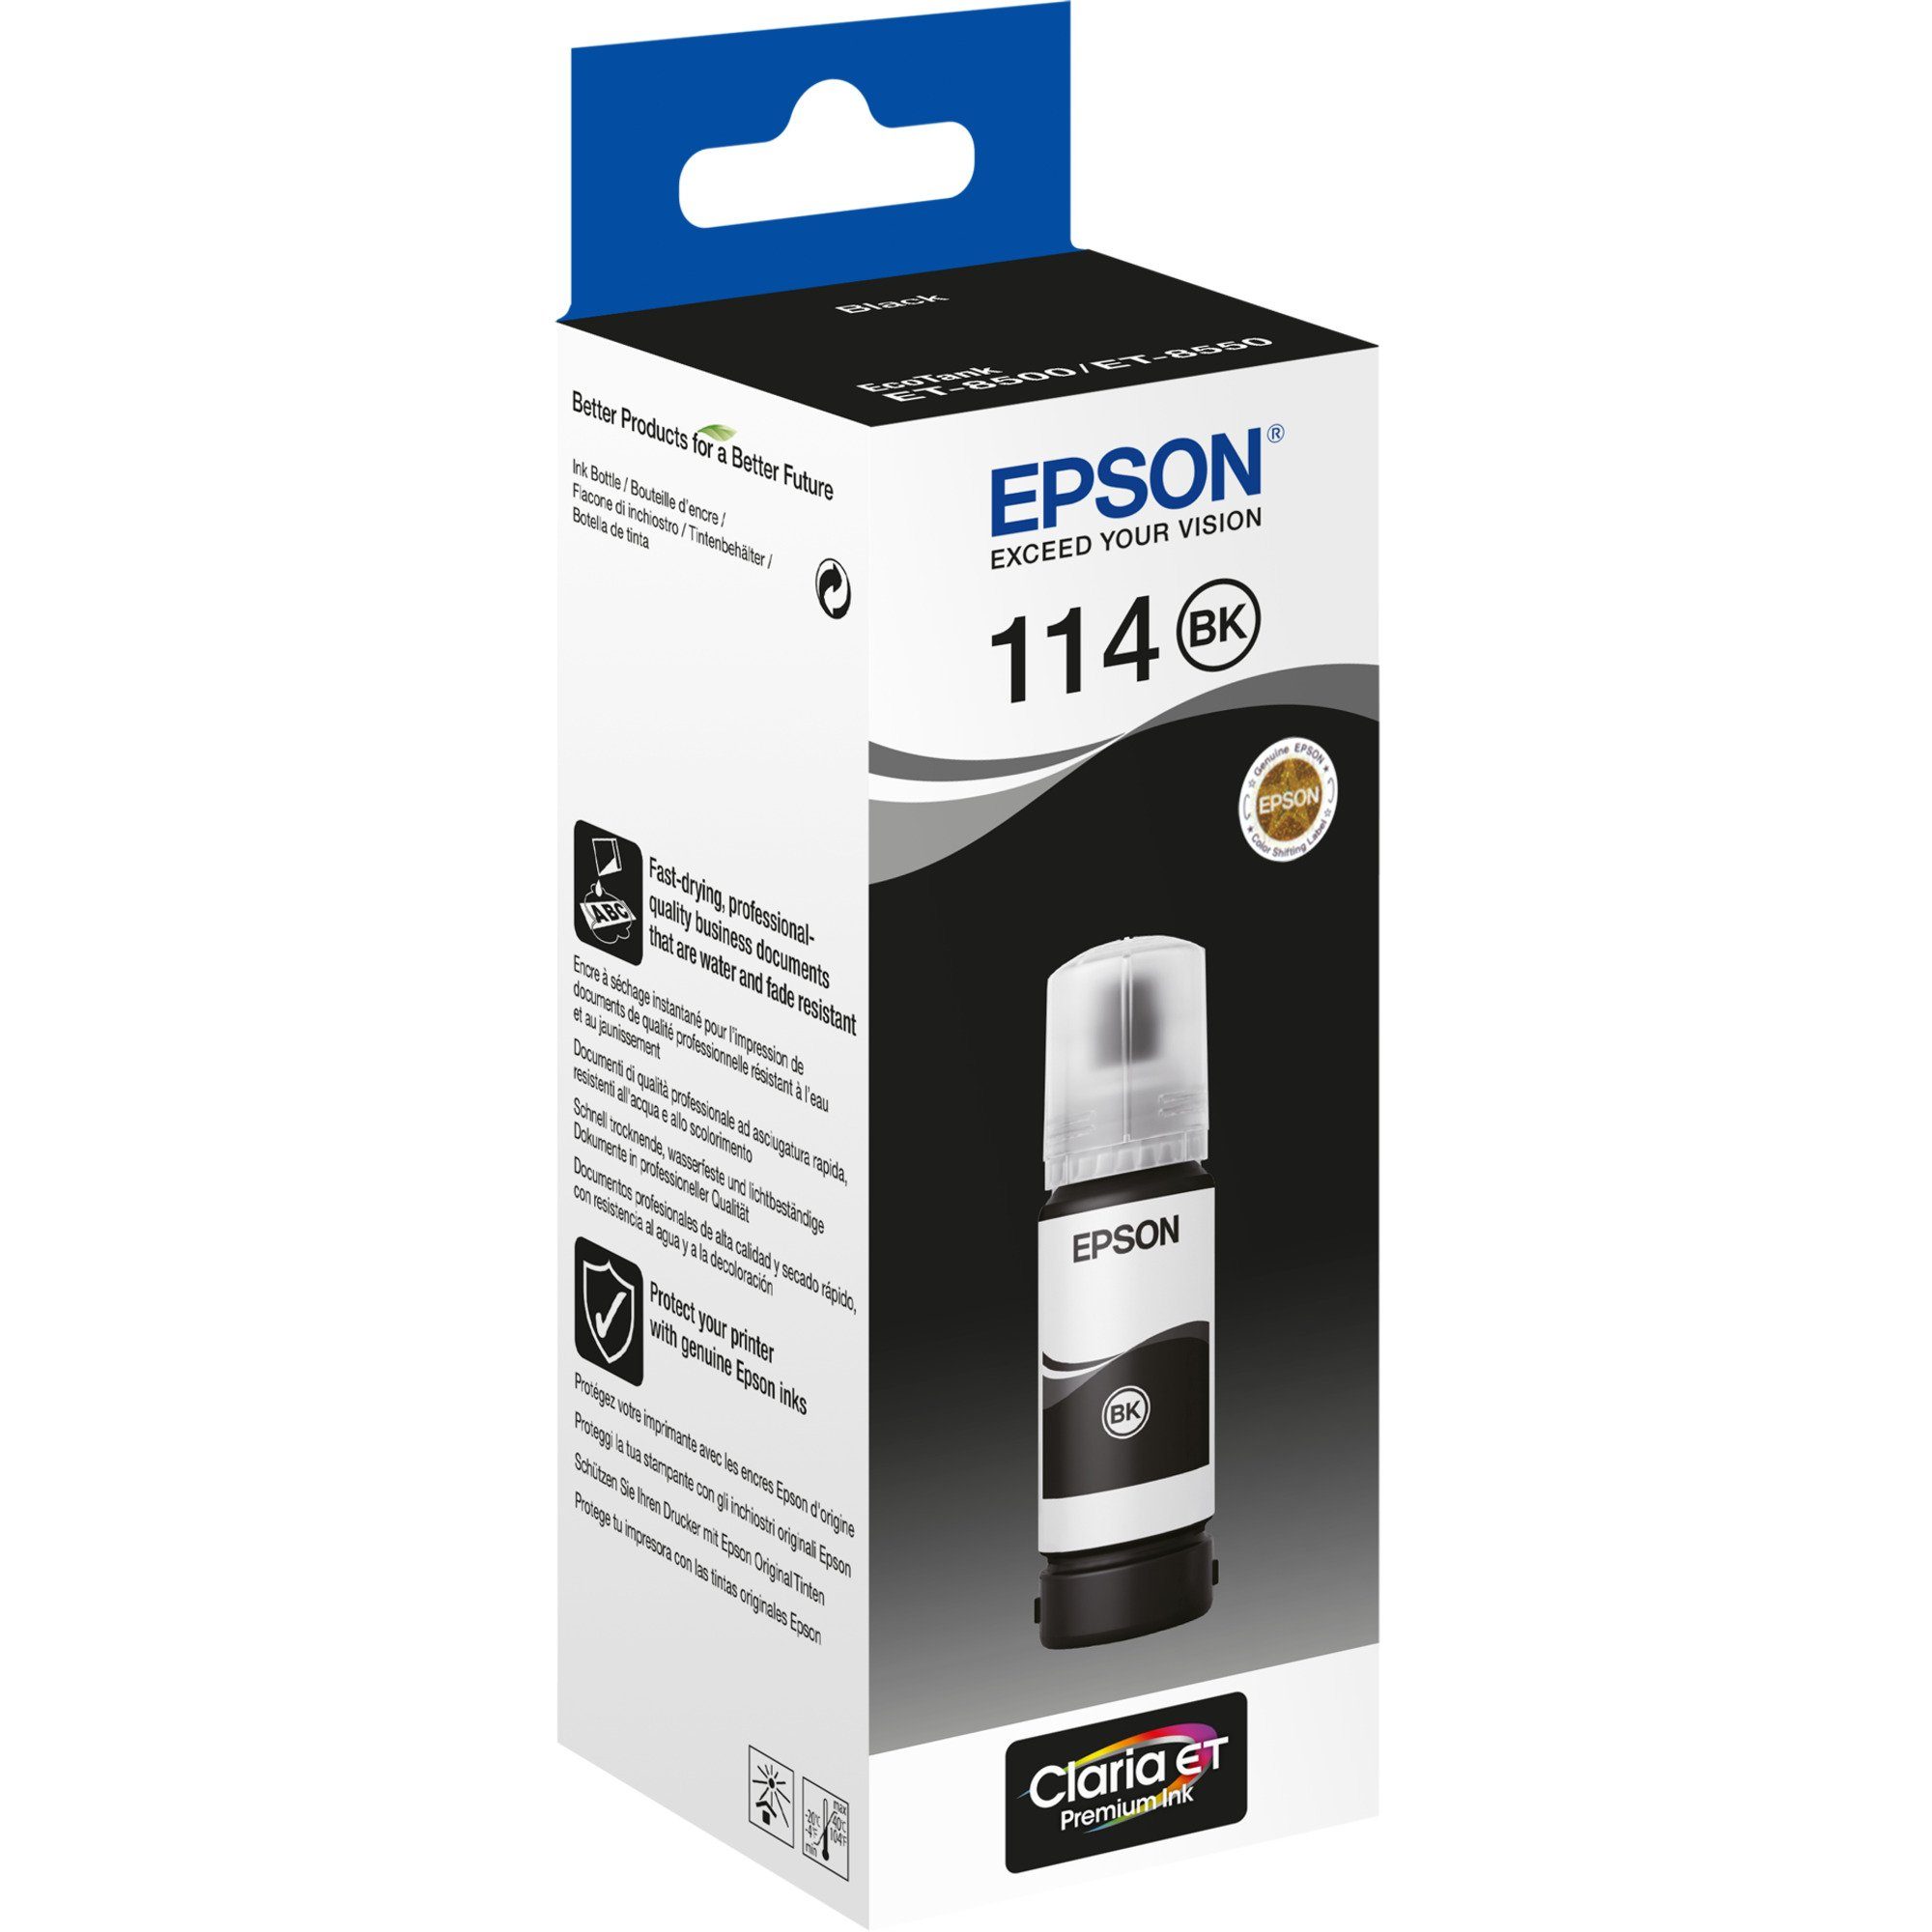 Epson Epson Tinte Pigment-schwarz 114 EcoTank Tintenpatrone schwarz pigment